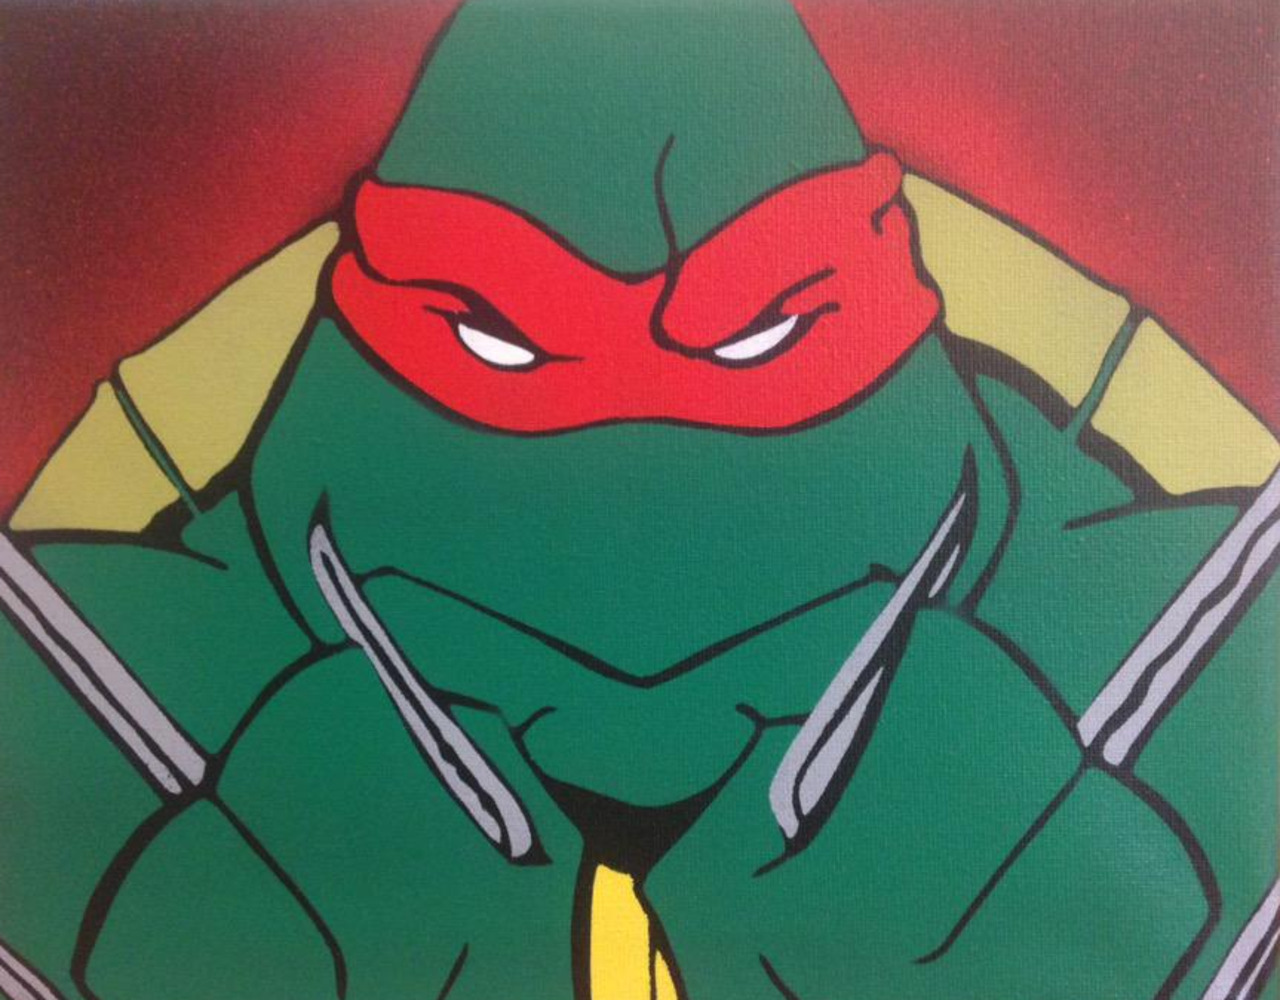 "Raphael" Teenage Mutant Ninja Turtles #stencilart by @chifferroo #TMNT #Raphael #spraypaint #graffiti #streetart https://t.co/jYTb4s1XFV